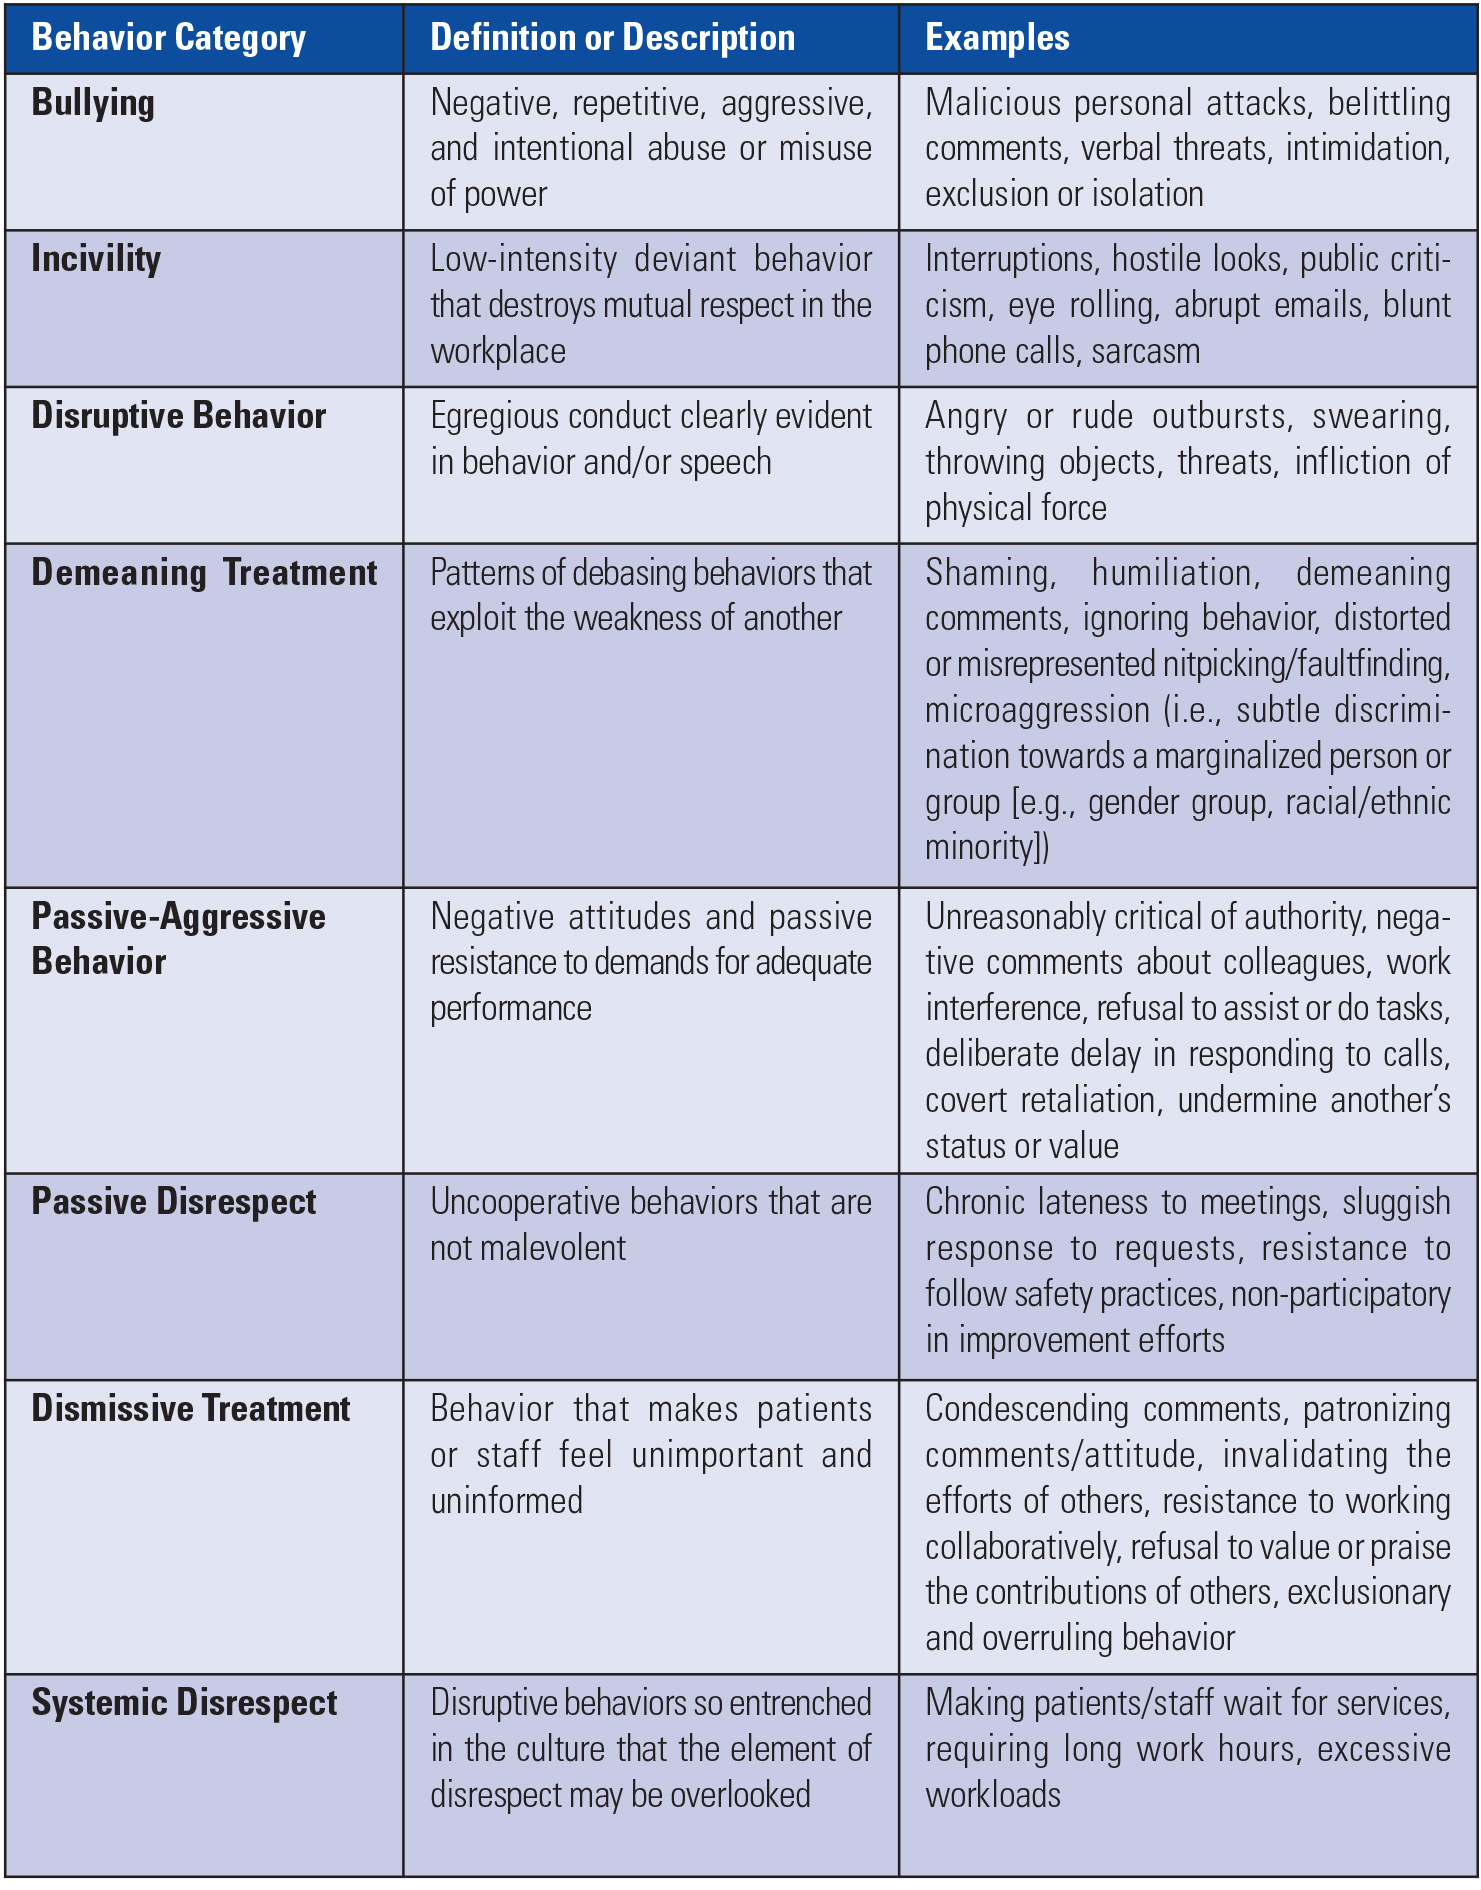 Table tabel listing Categories of Disrespectful Behavior in Healthcare